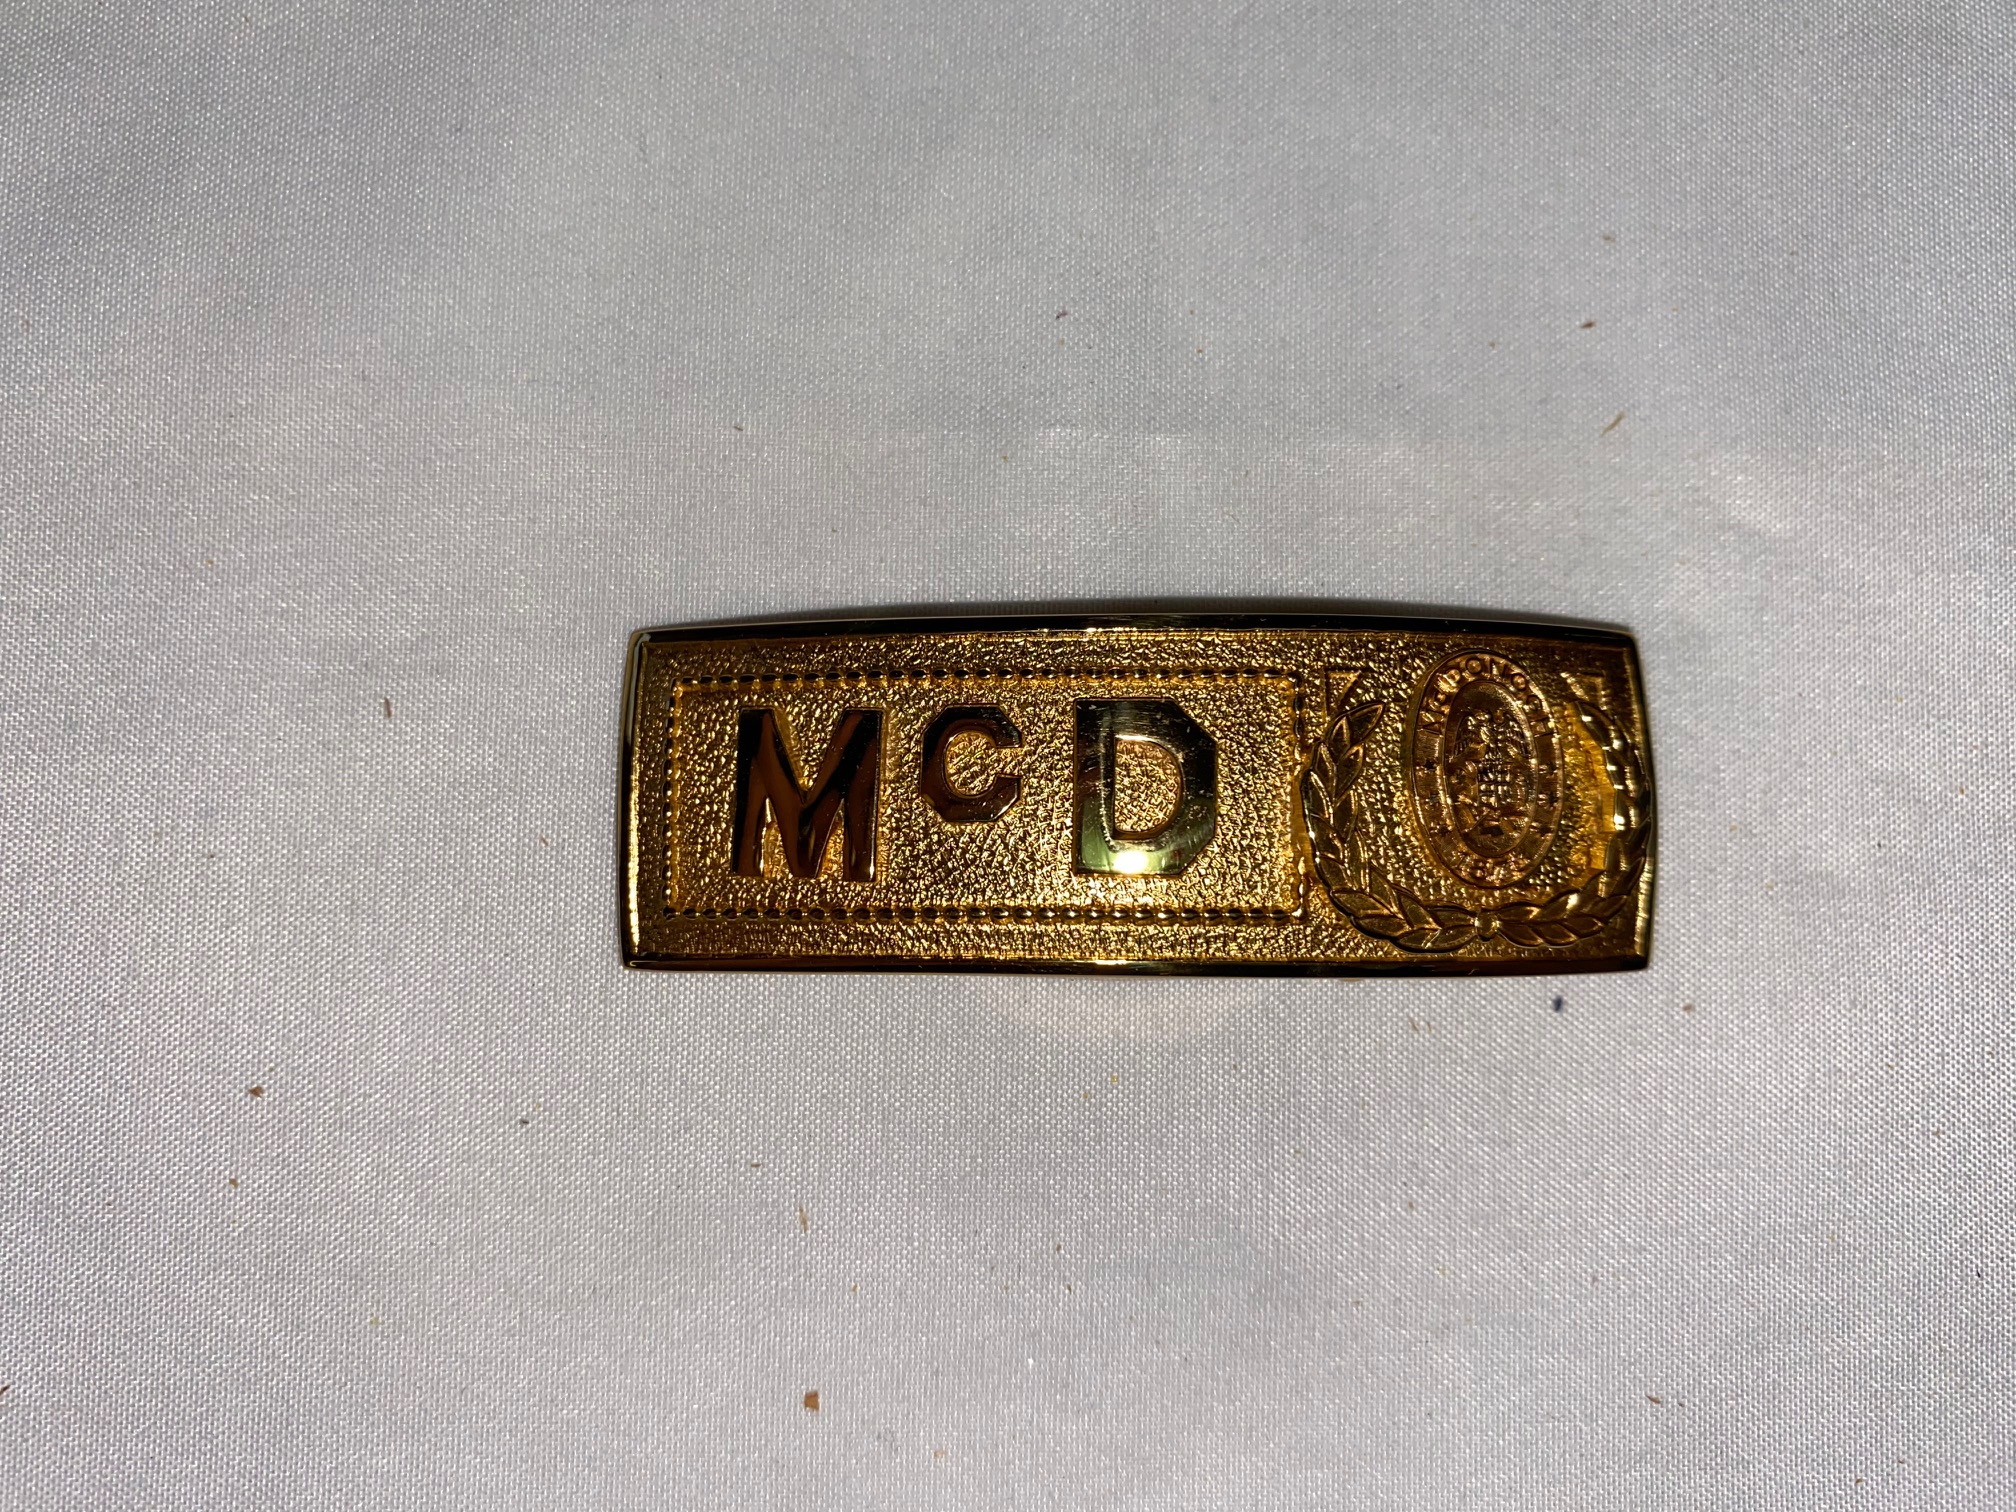 NOS Vintage McD McDonogh Brass Belt Buckle